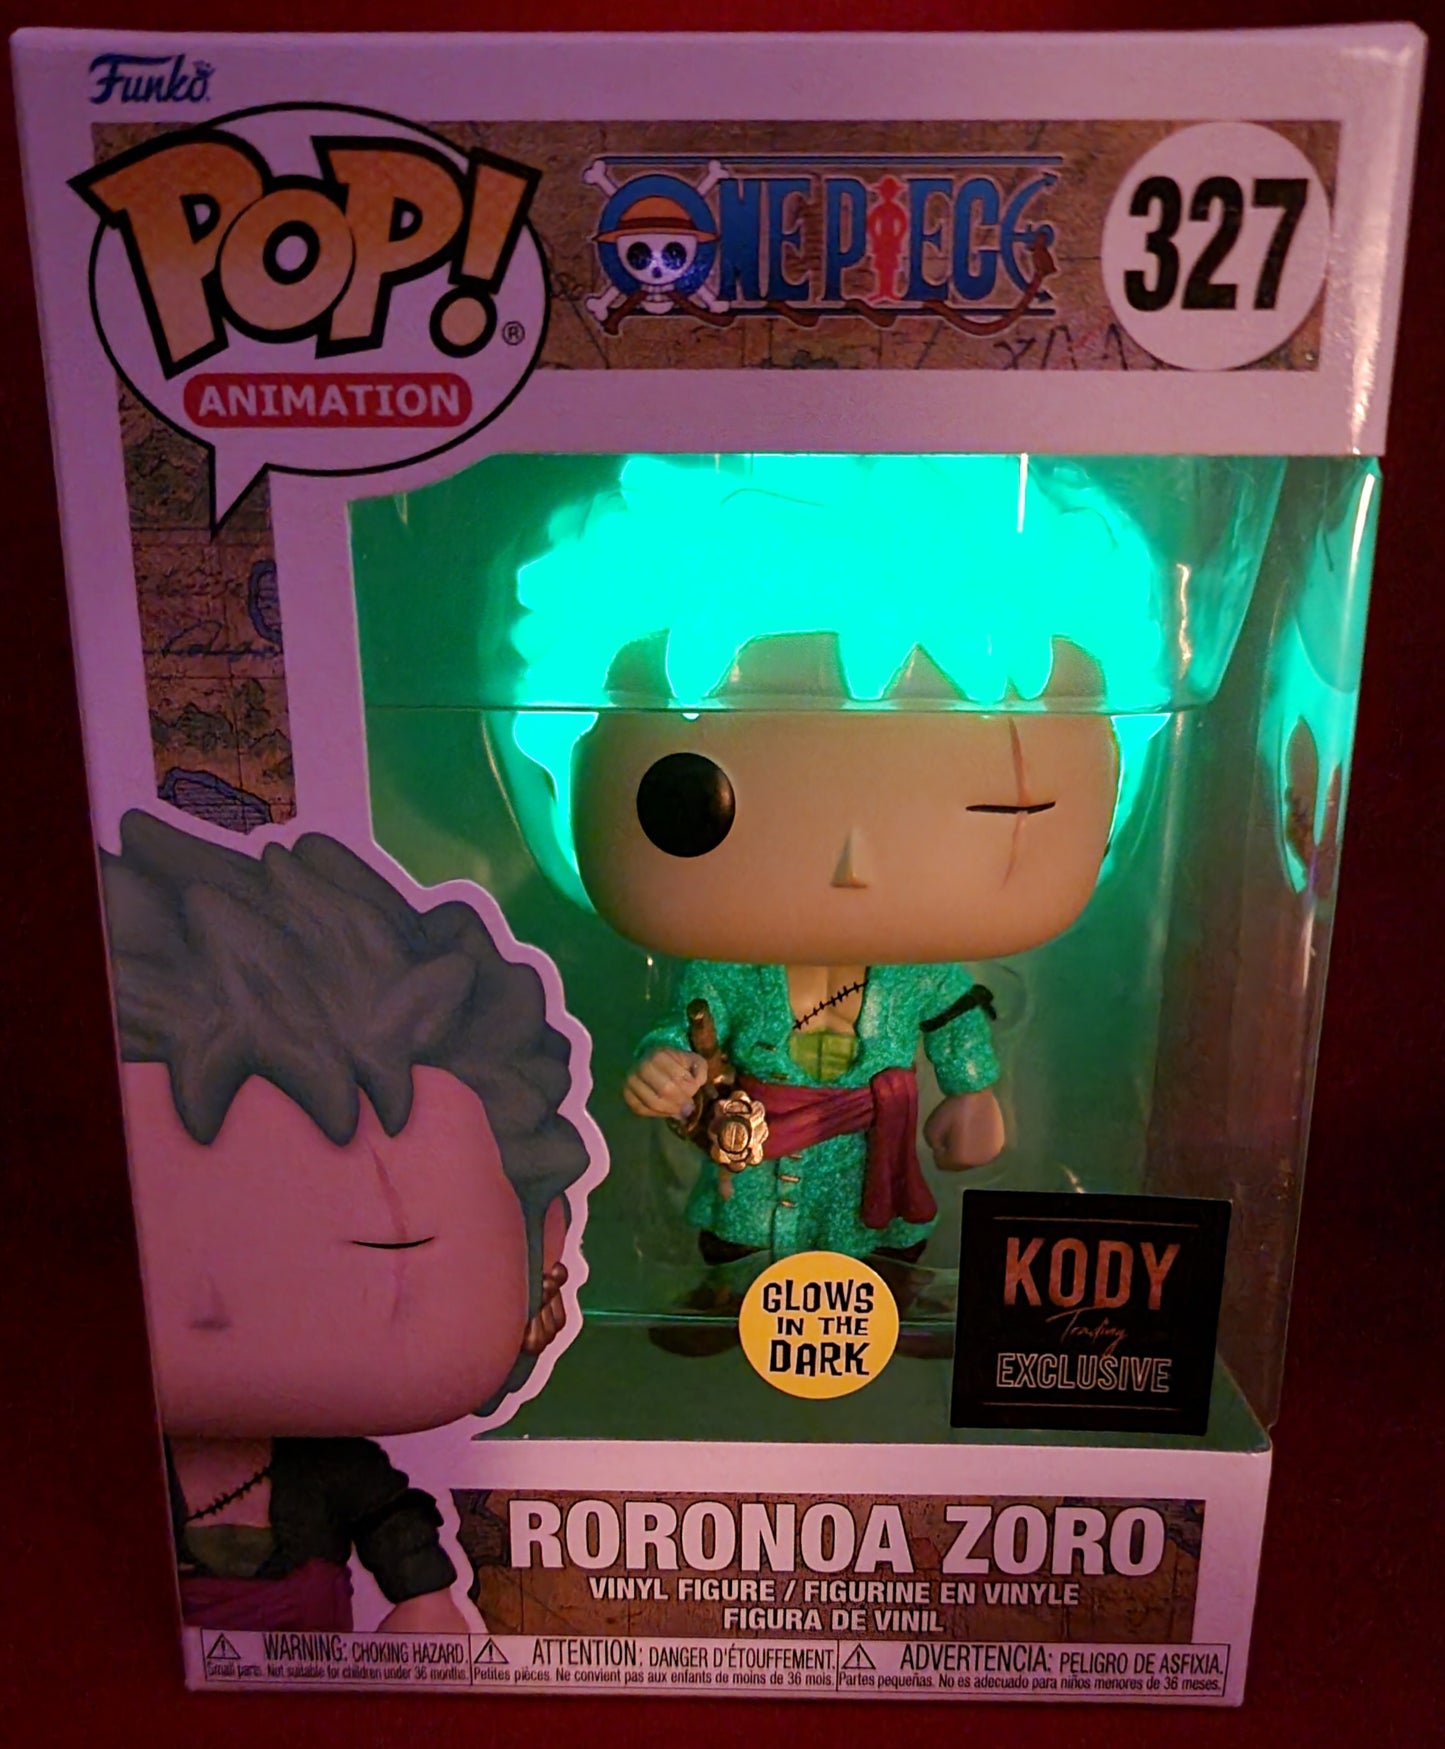 Roronoa Zoro kody exclusive # 327 (nib)
With pop protector